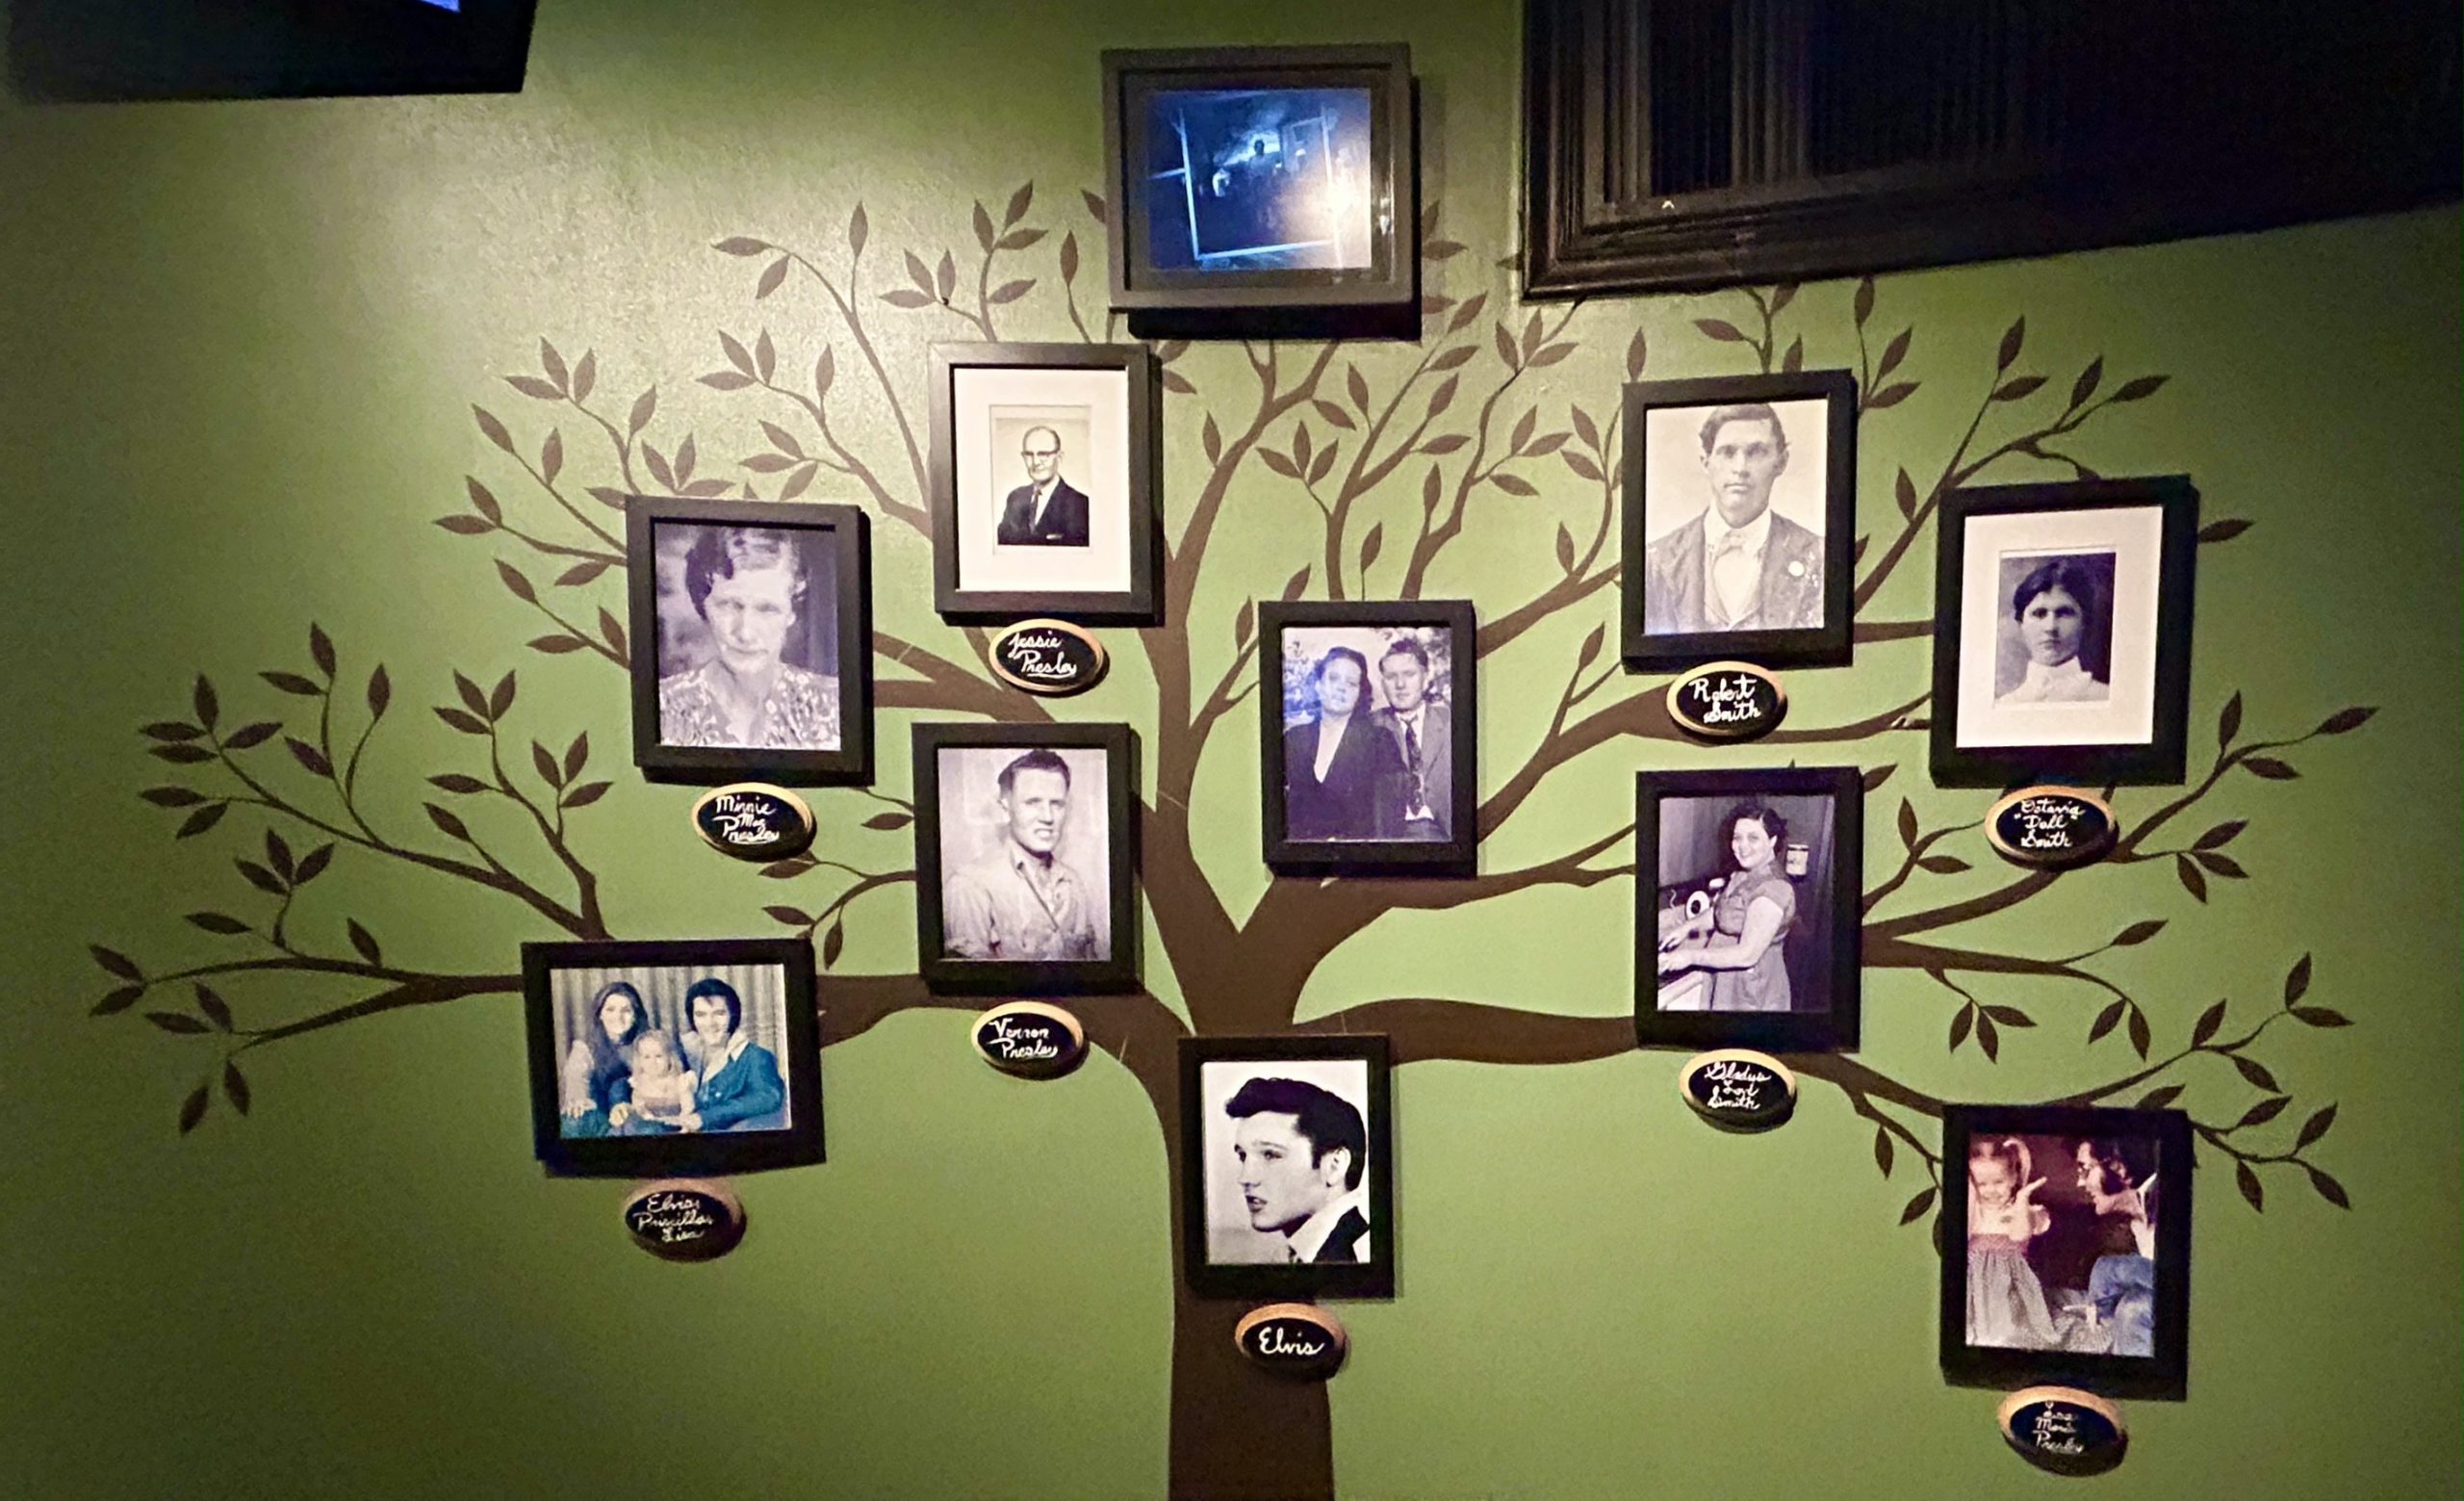 Presley Family Tree, Graceland